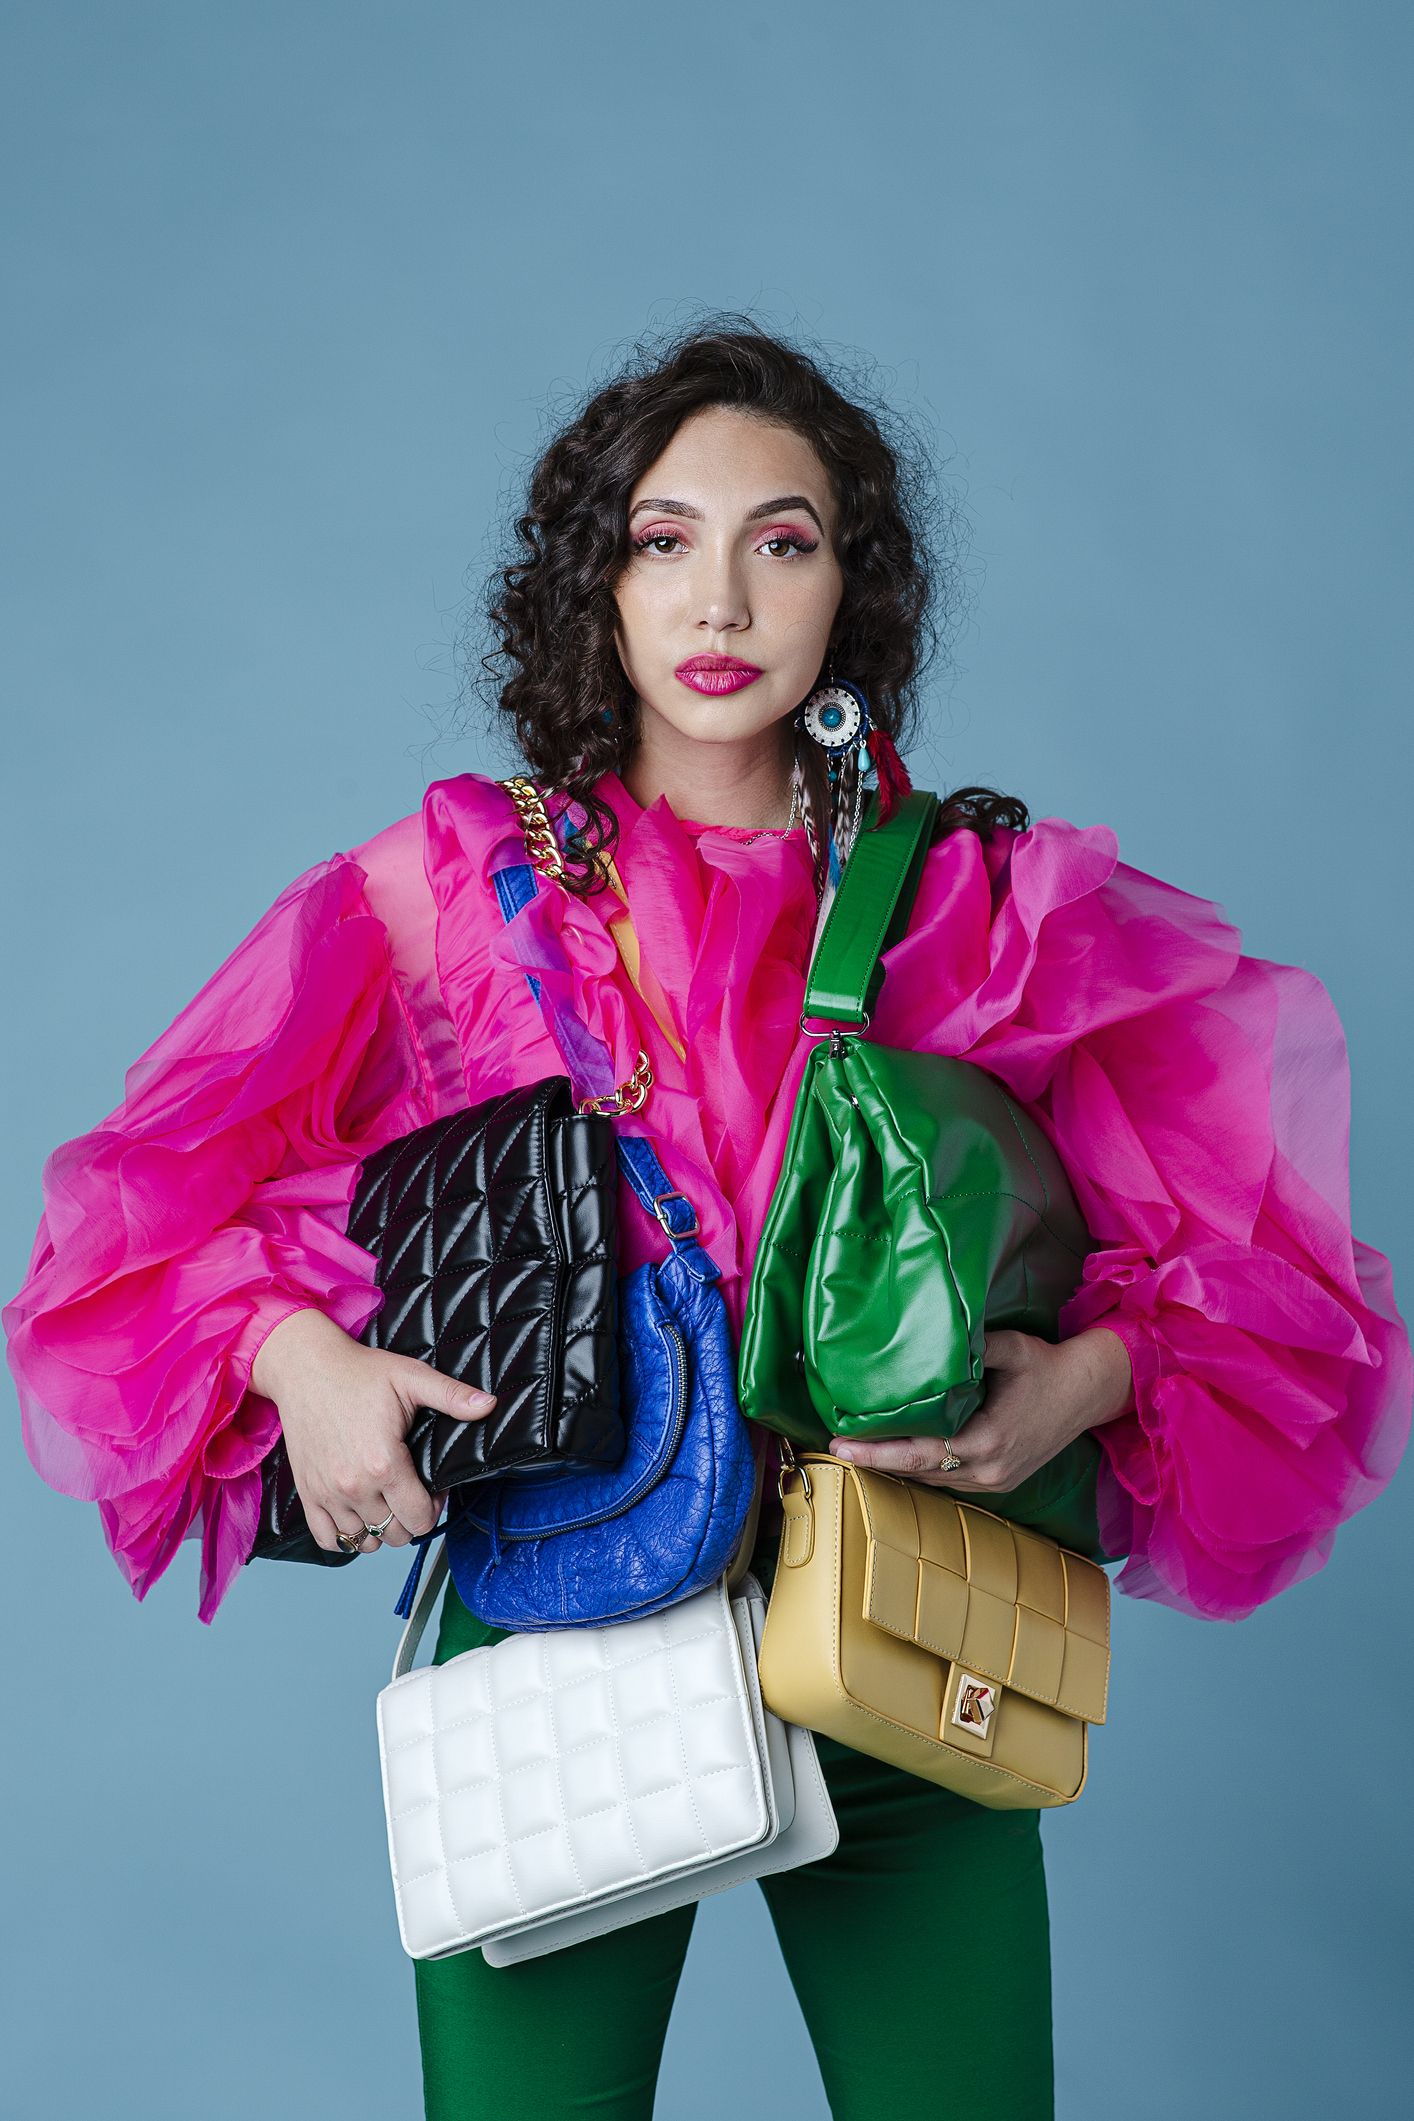 LIERWOI Fashion Envelope Bag crossbody bag for women,2 Removable straps, PU  Leather shoulder bag Handbag Foldover Purse: Handbags: Amazon.com